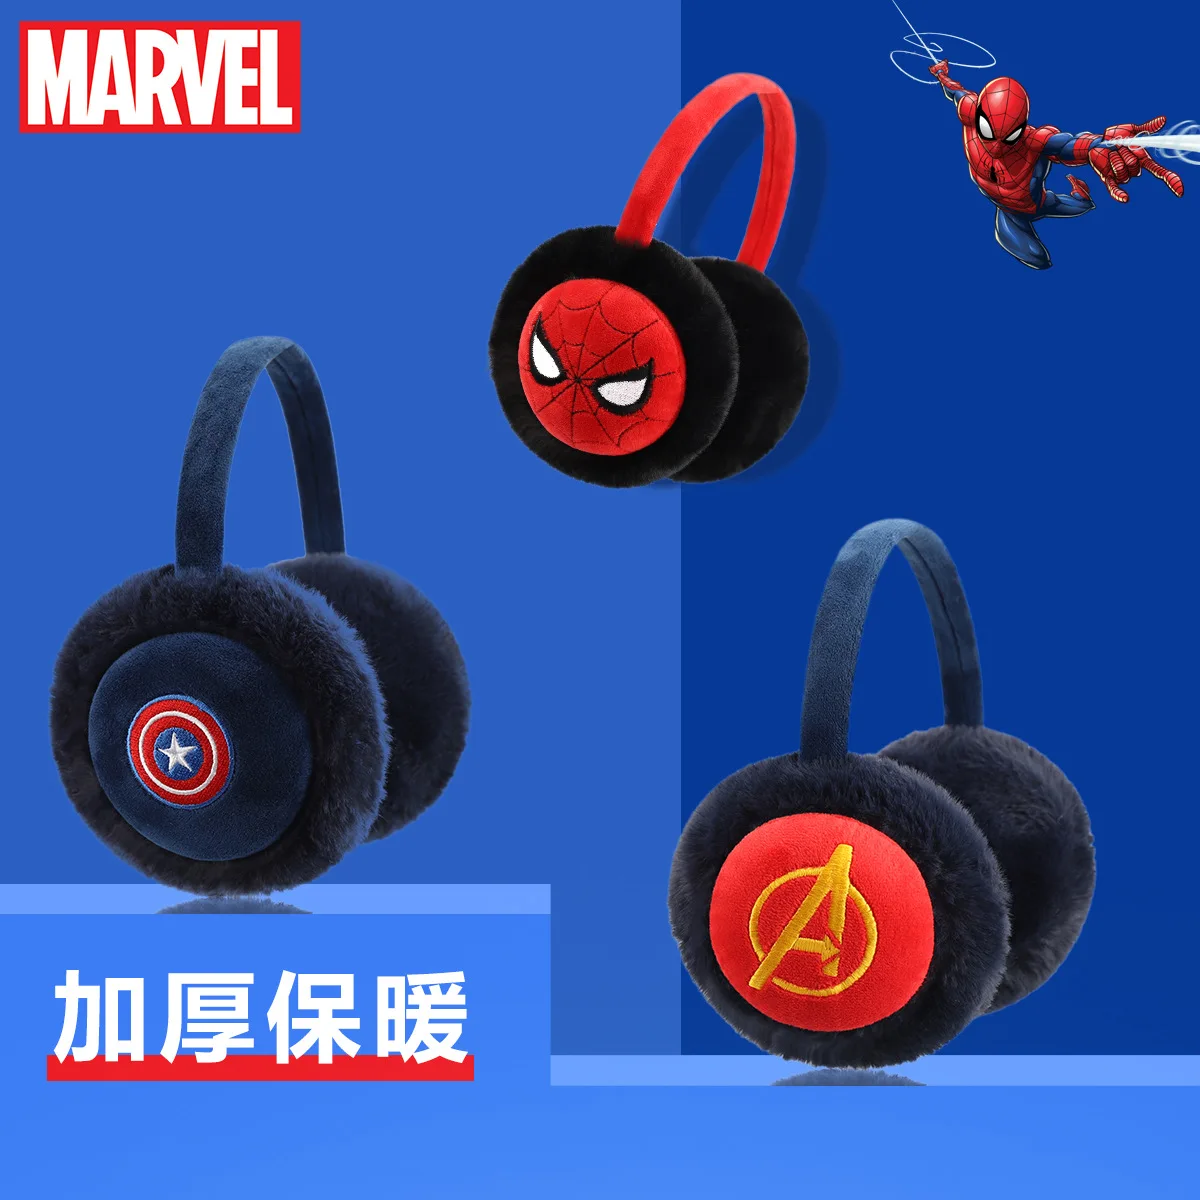 

Disney Soft Plush Warm Earmuffs For Boys Ear Warmer Winter Earflap Outdoor Cold Protection Spider Man Captain America Ear Cover